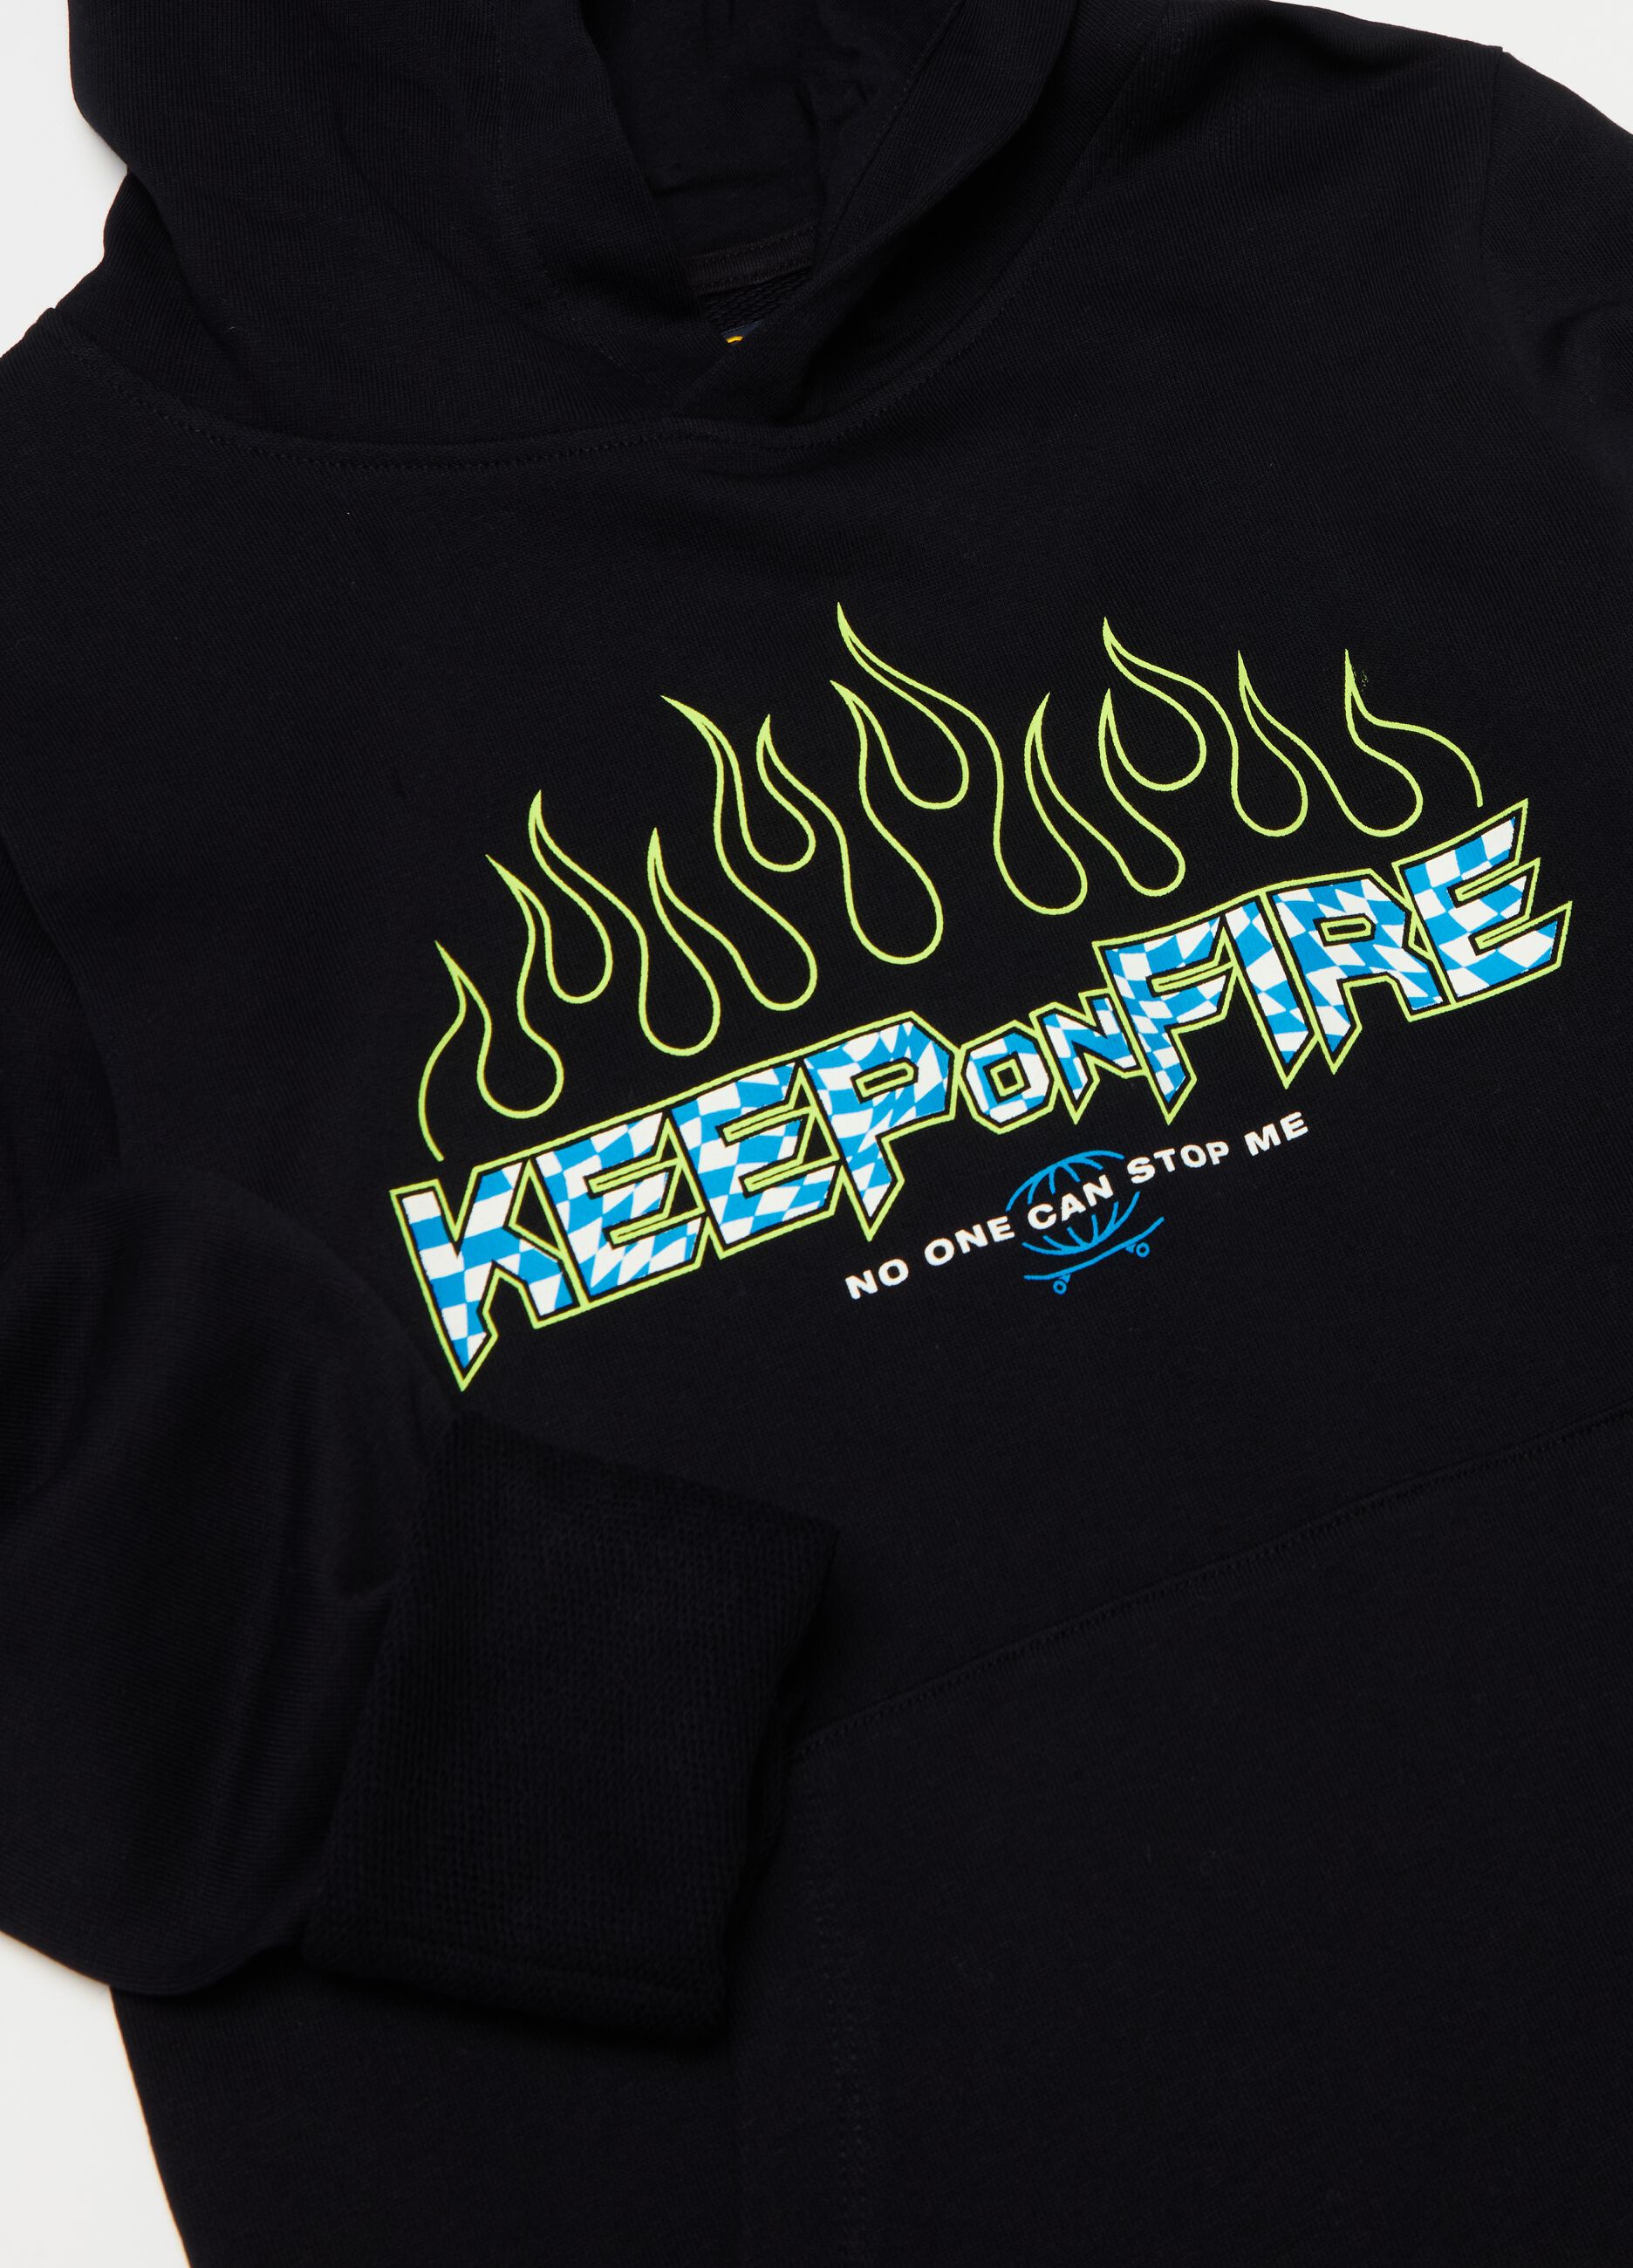 Sweatshirt with hood and skateboard print